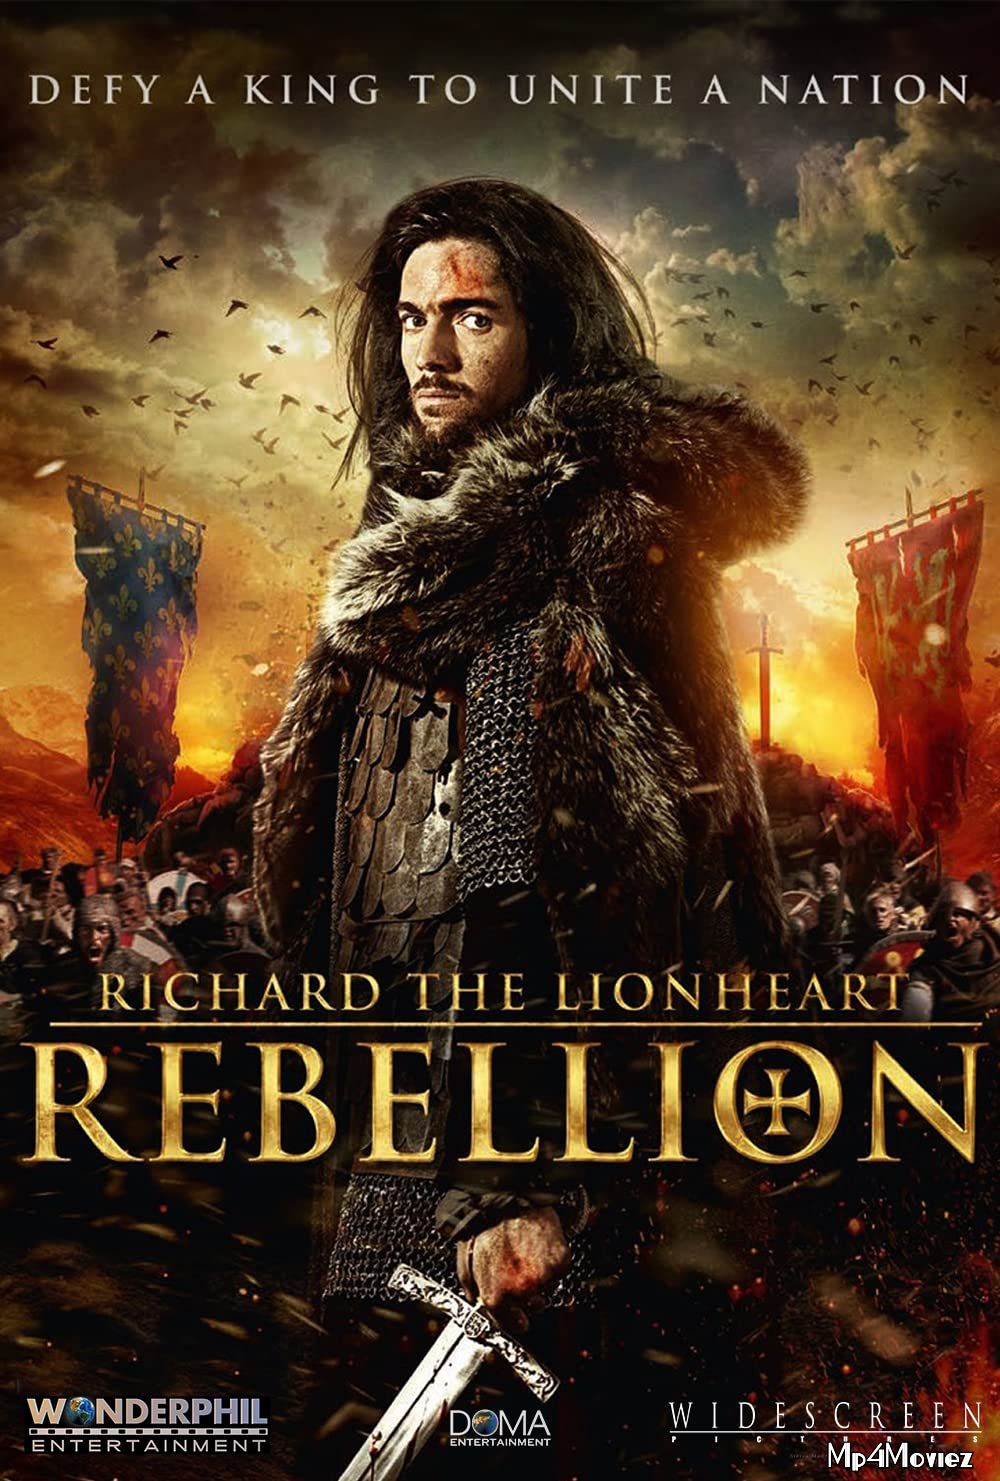 Richard the Lionheart Rebellion (2015) Hindi Dubbed BluRay download full movie